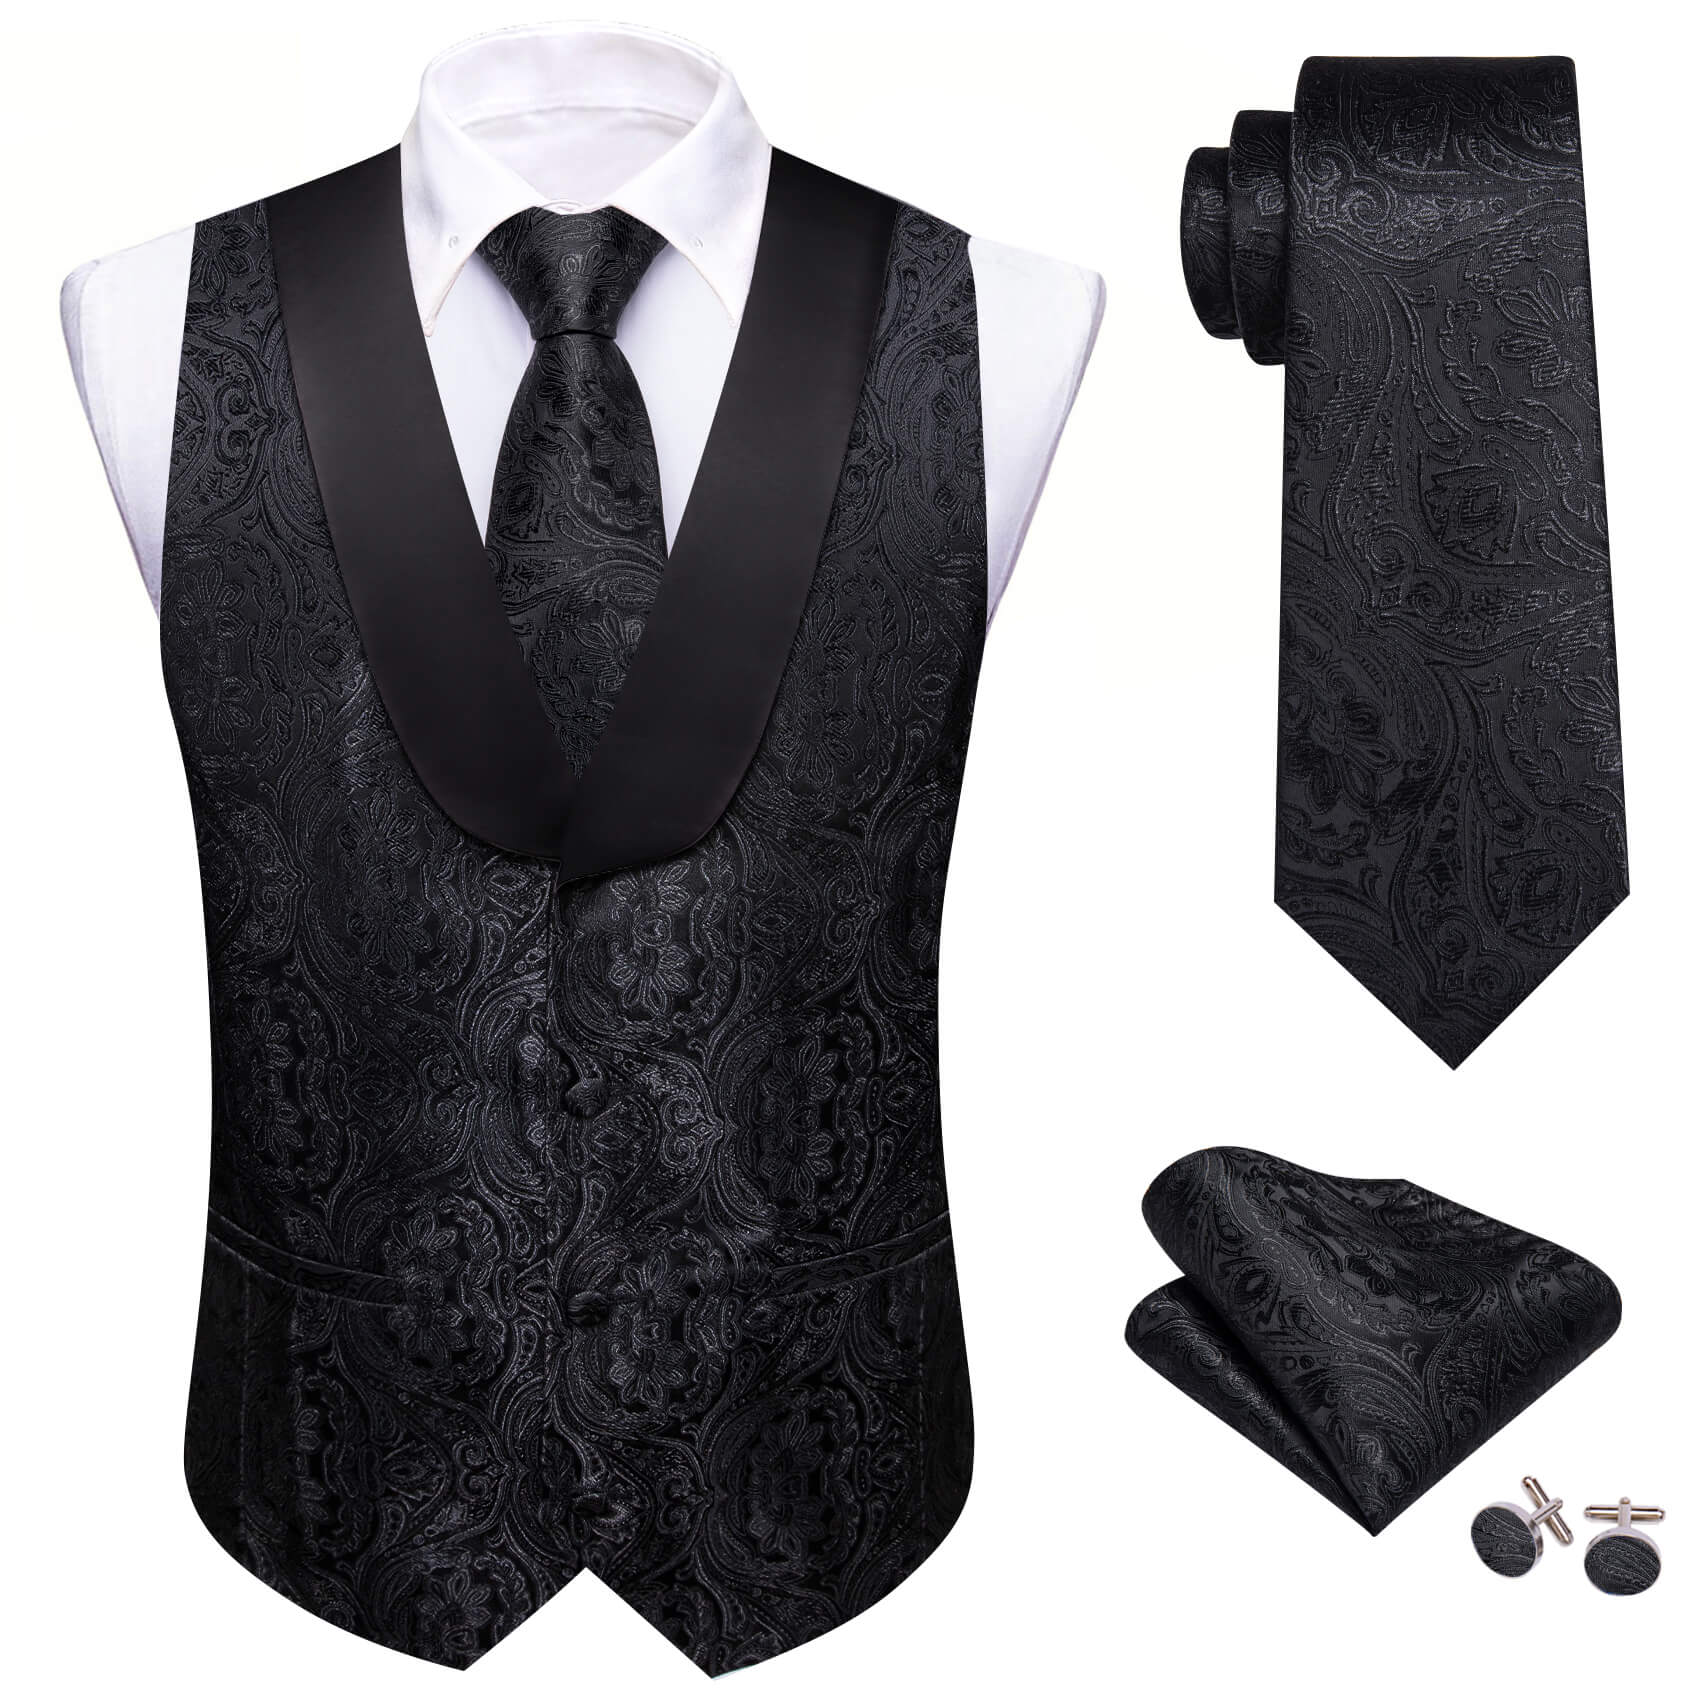 Barry.wang Men's Vest Black Silk Paisley Shawl Collar Vest Tie Handkerchief Cufflinks Set